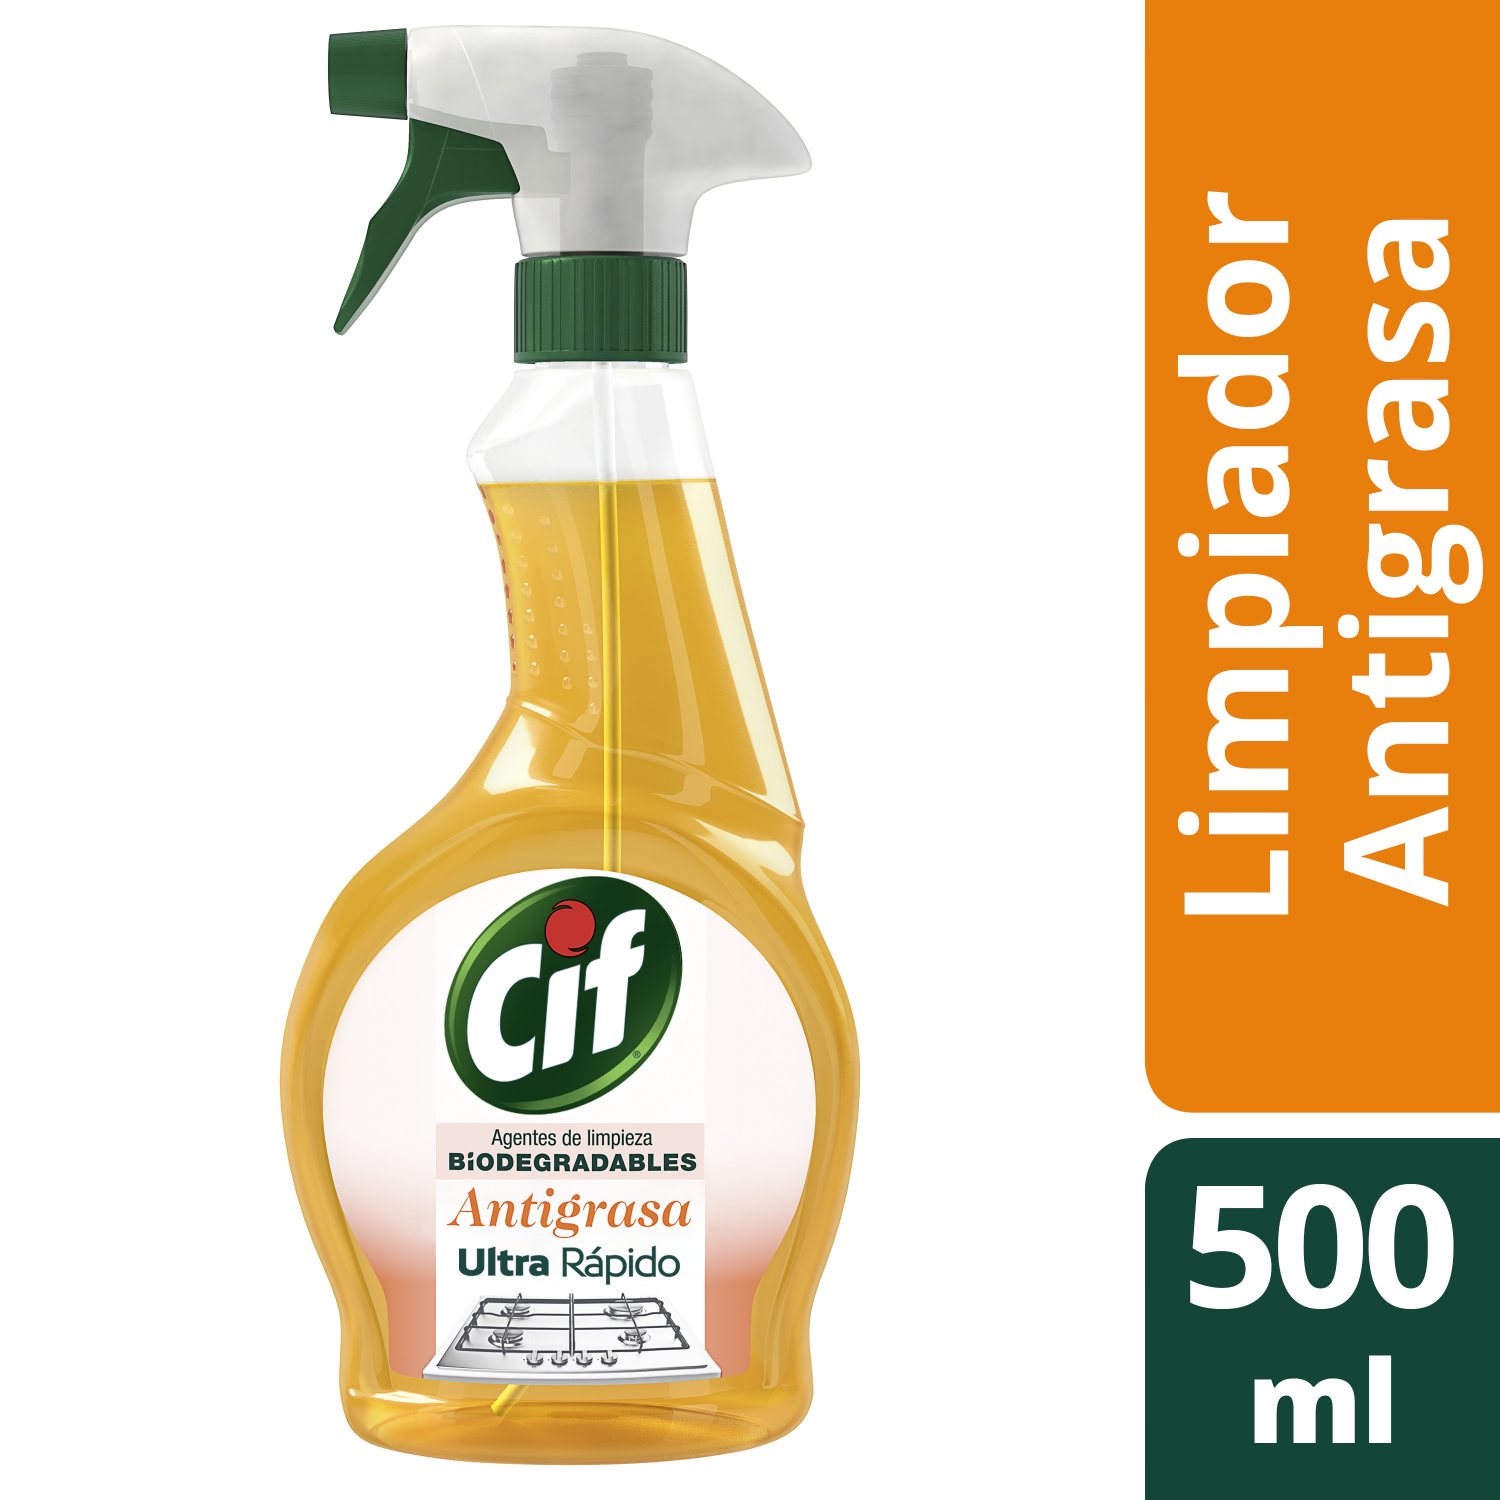 CIF Antigrasa Gatillo De500ml | Unilever Professional 